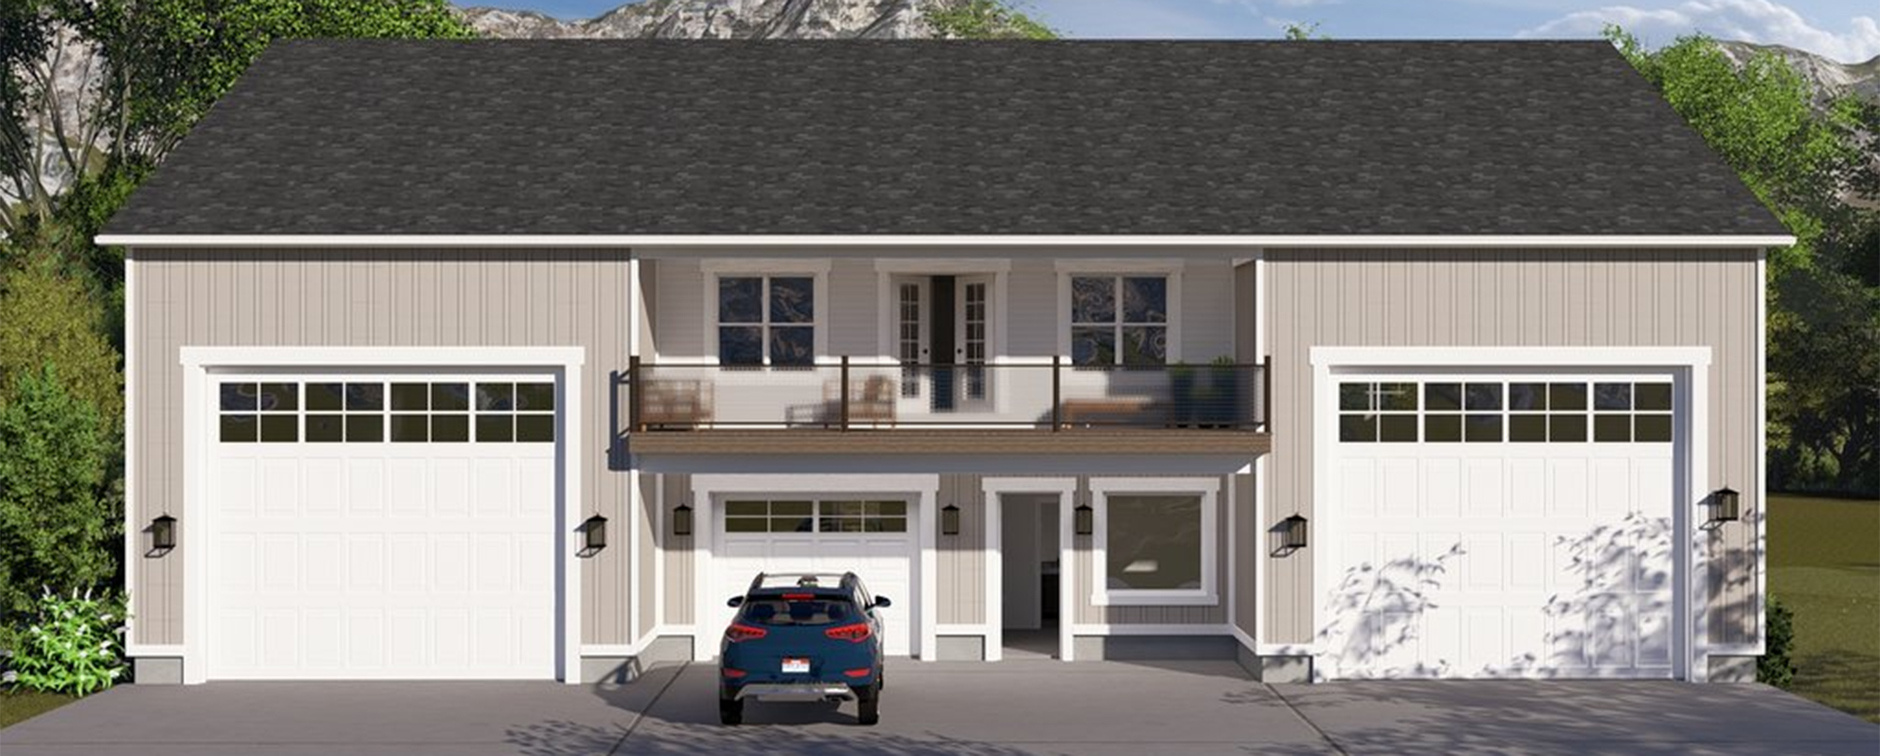 Garage Plan with Apartment 1060-230